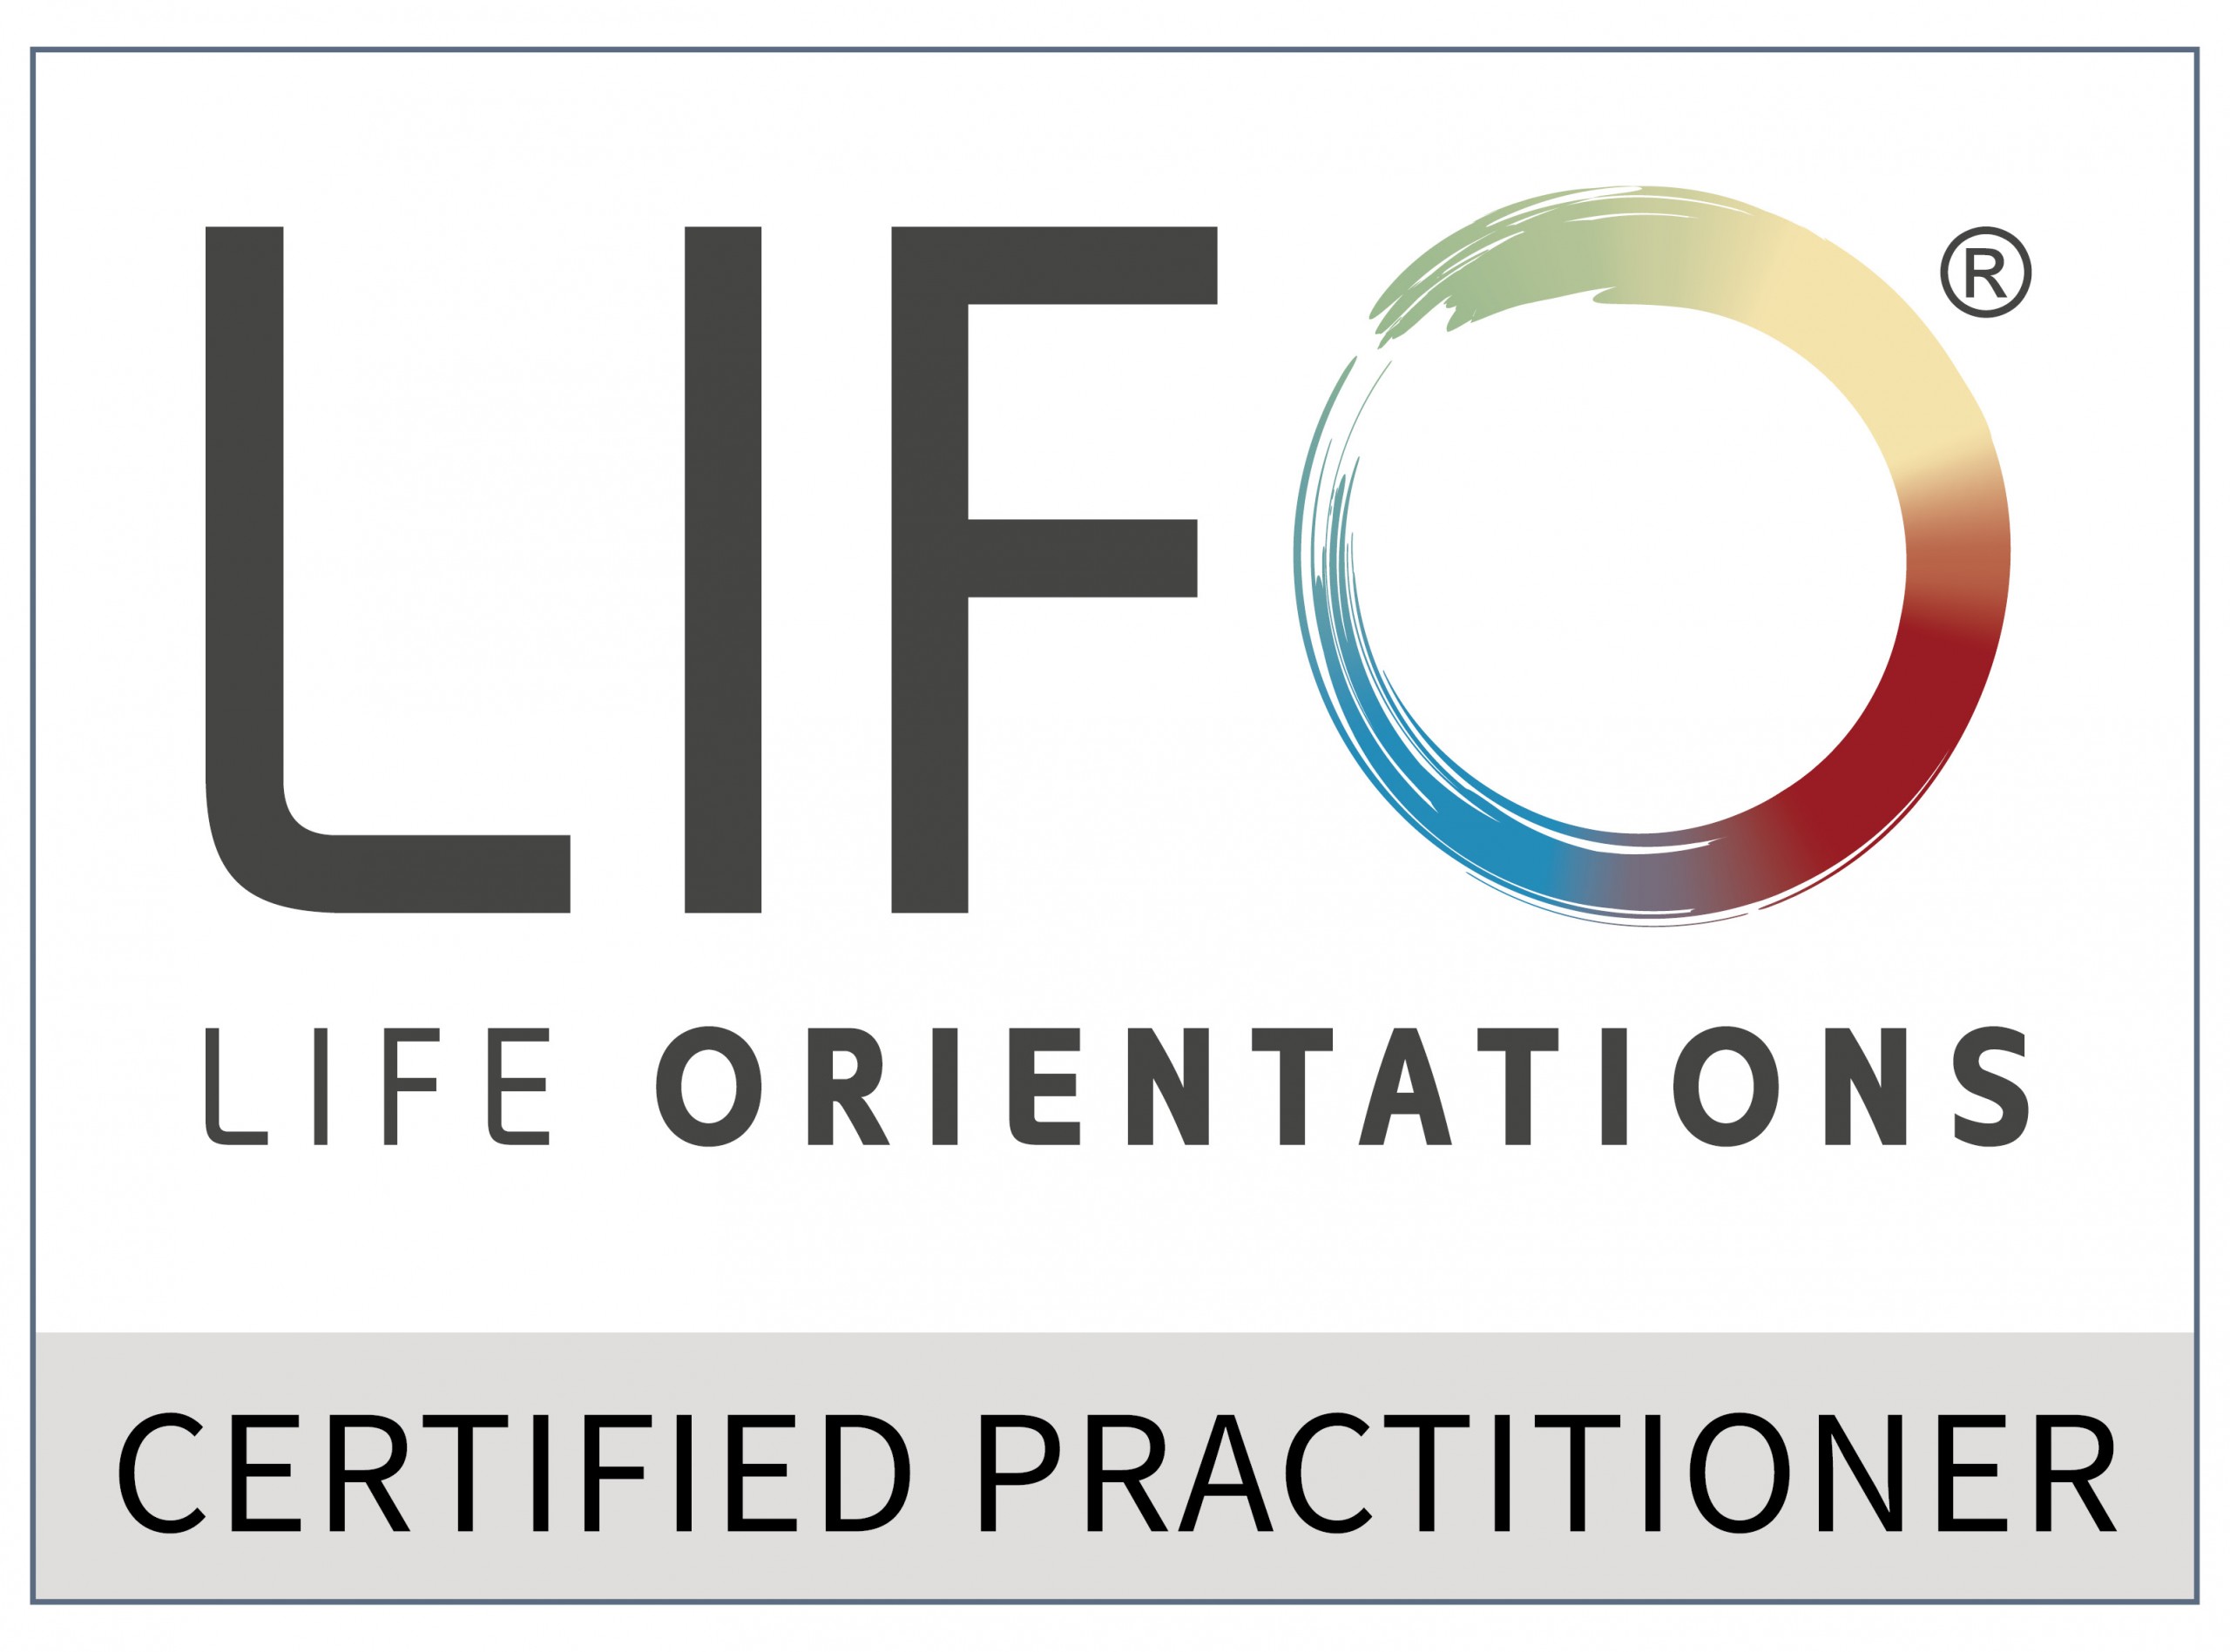 Logo LIFO life orientations - Certified Practitioner